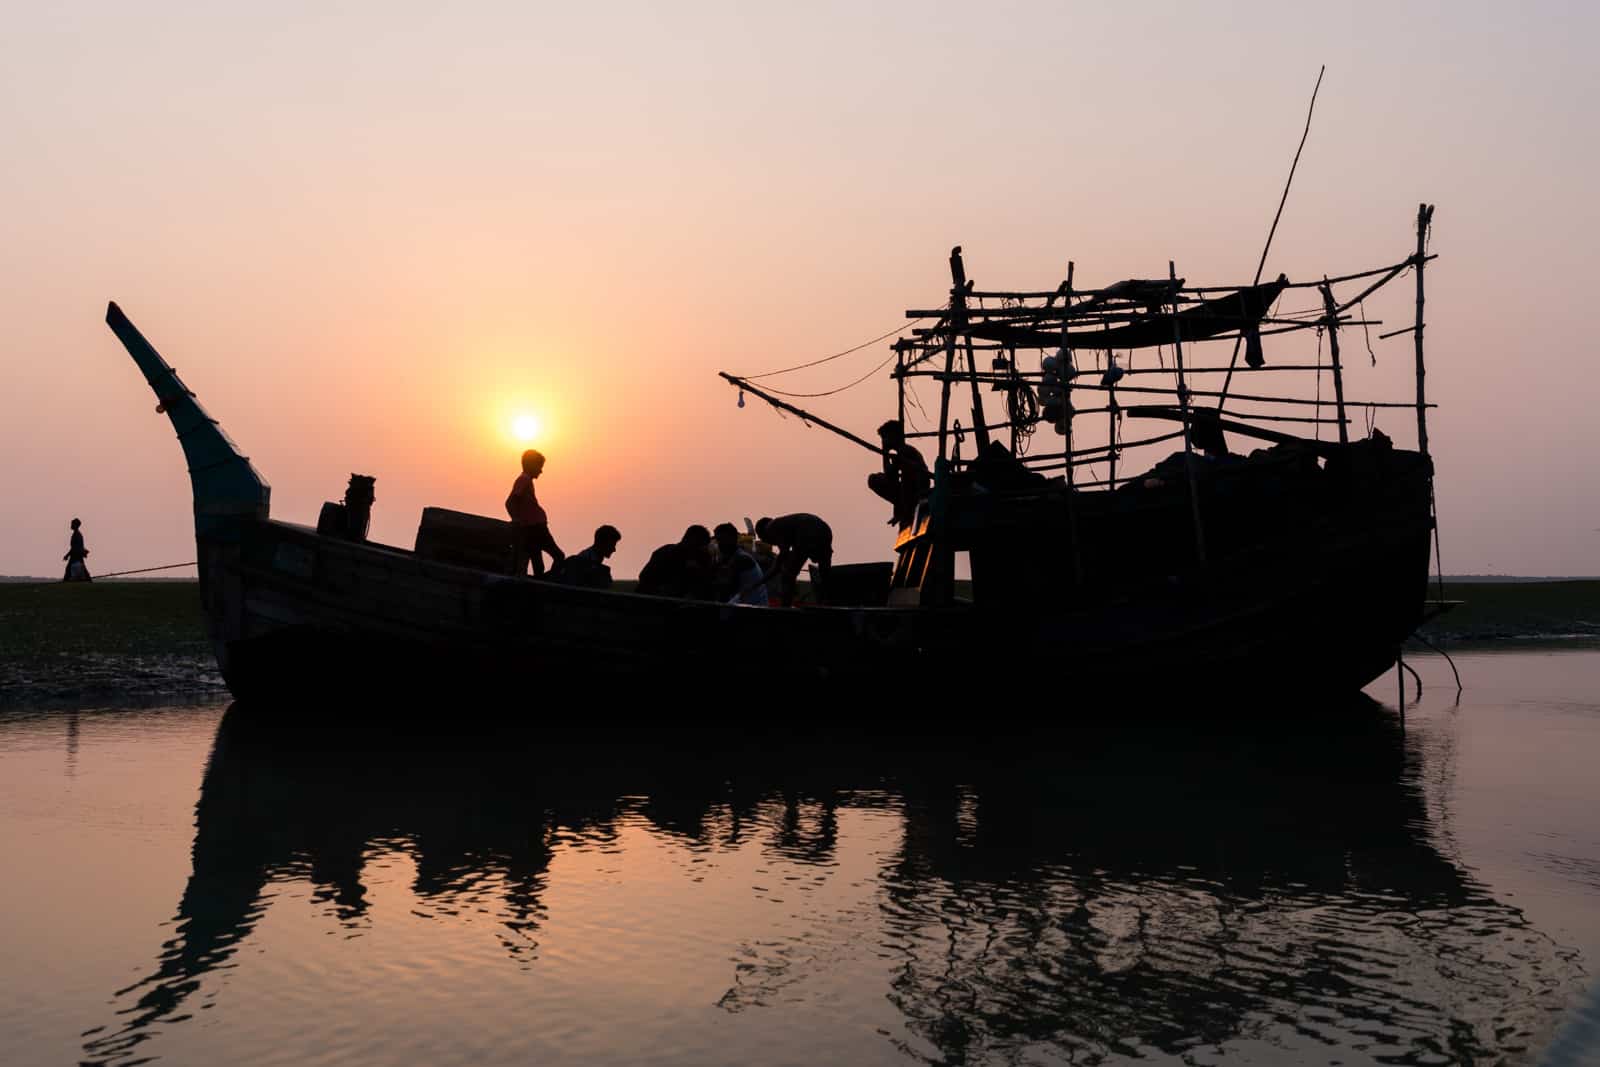 Travel guide to Nijhum Dwip, Bangladesh - Sunset behind fishing trawler boats on the island - Lost With Purpose travel blog